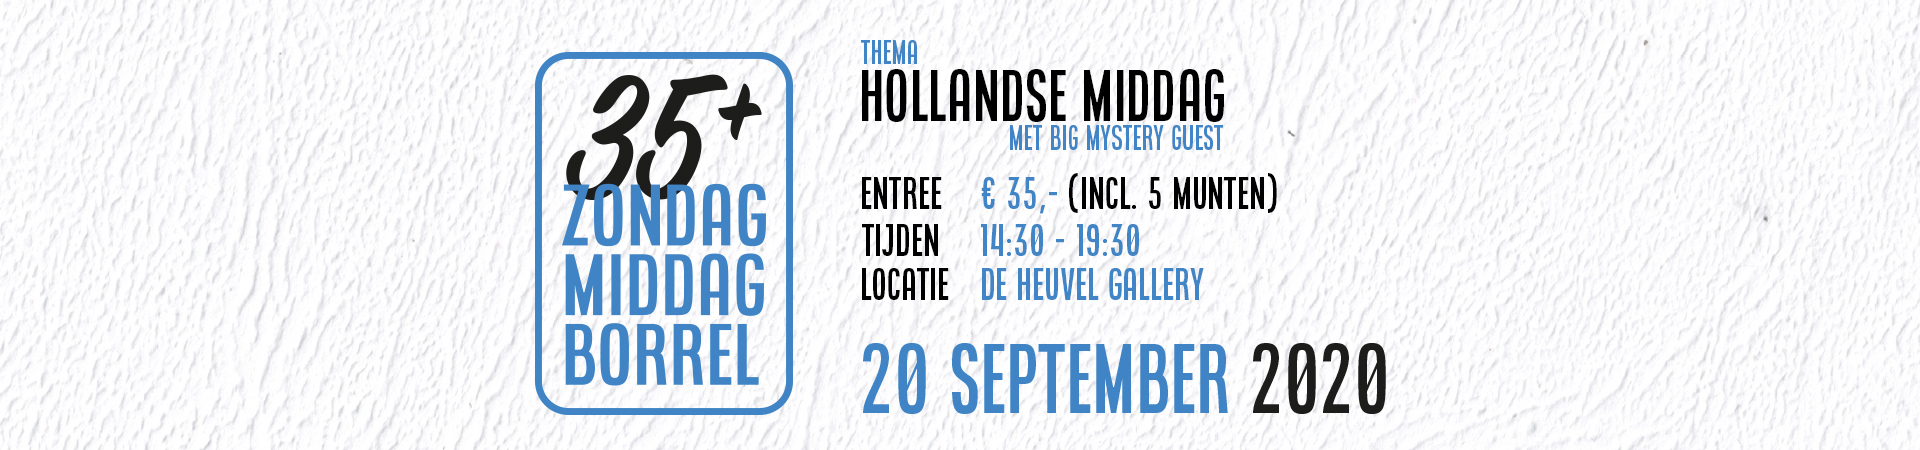 Zondagmiddagborrel Heuvel Gallery 20-09-2020